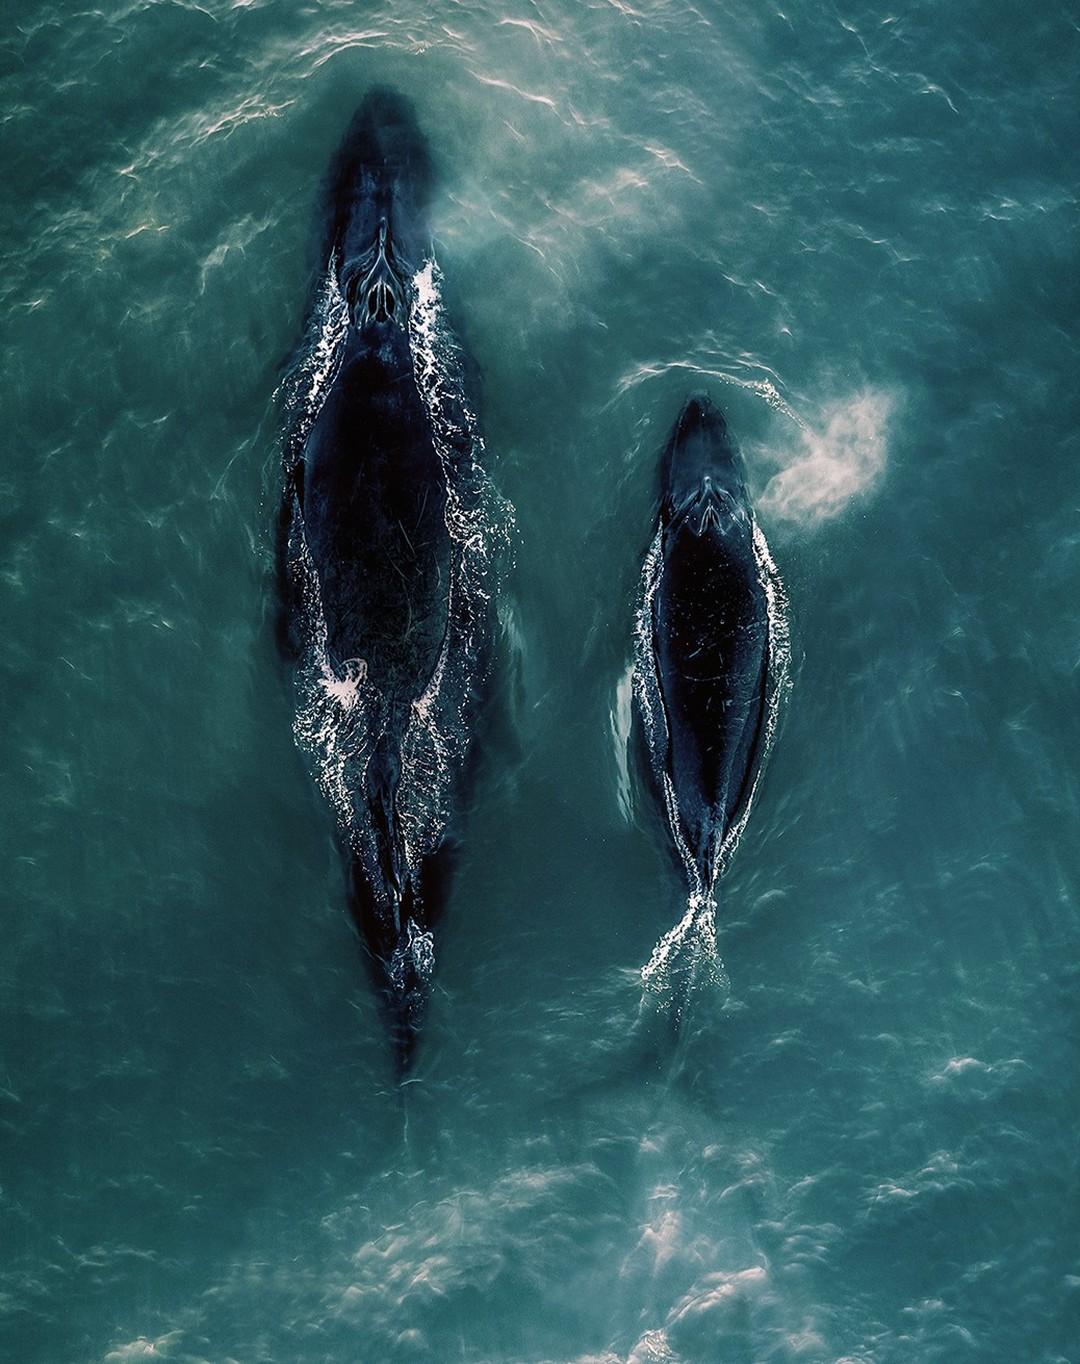 A humpback whale and calf near the shoreline during a beach wedding, in October 2022, near Bridgehampton, New York. (Courtesy of <a href="https://www.instagram.com/hamptonsdroneart/">Joanna L Steidle</a>)